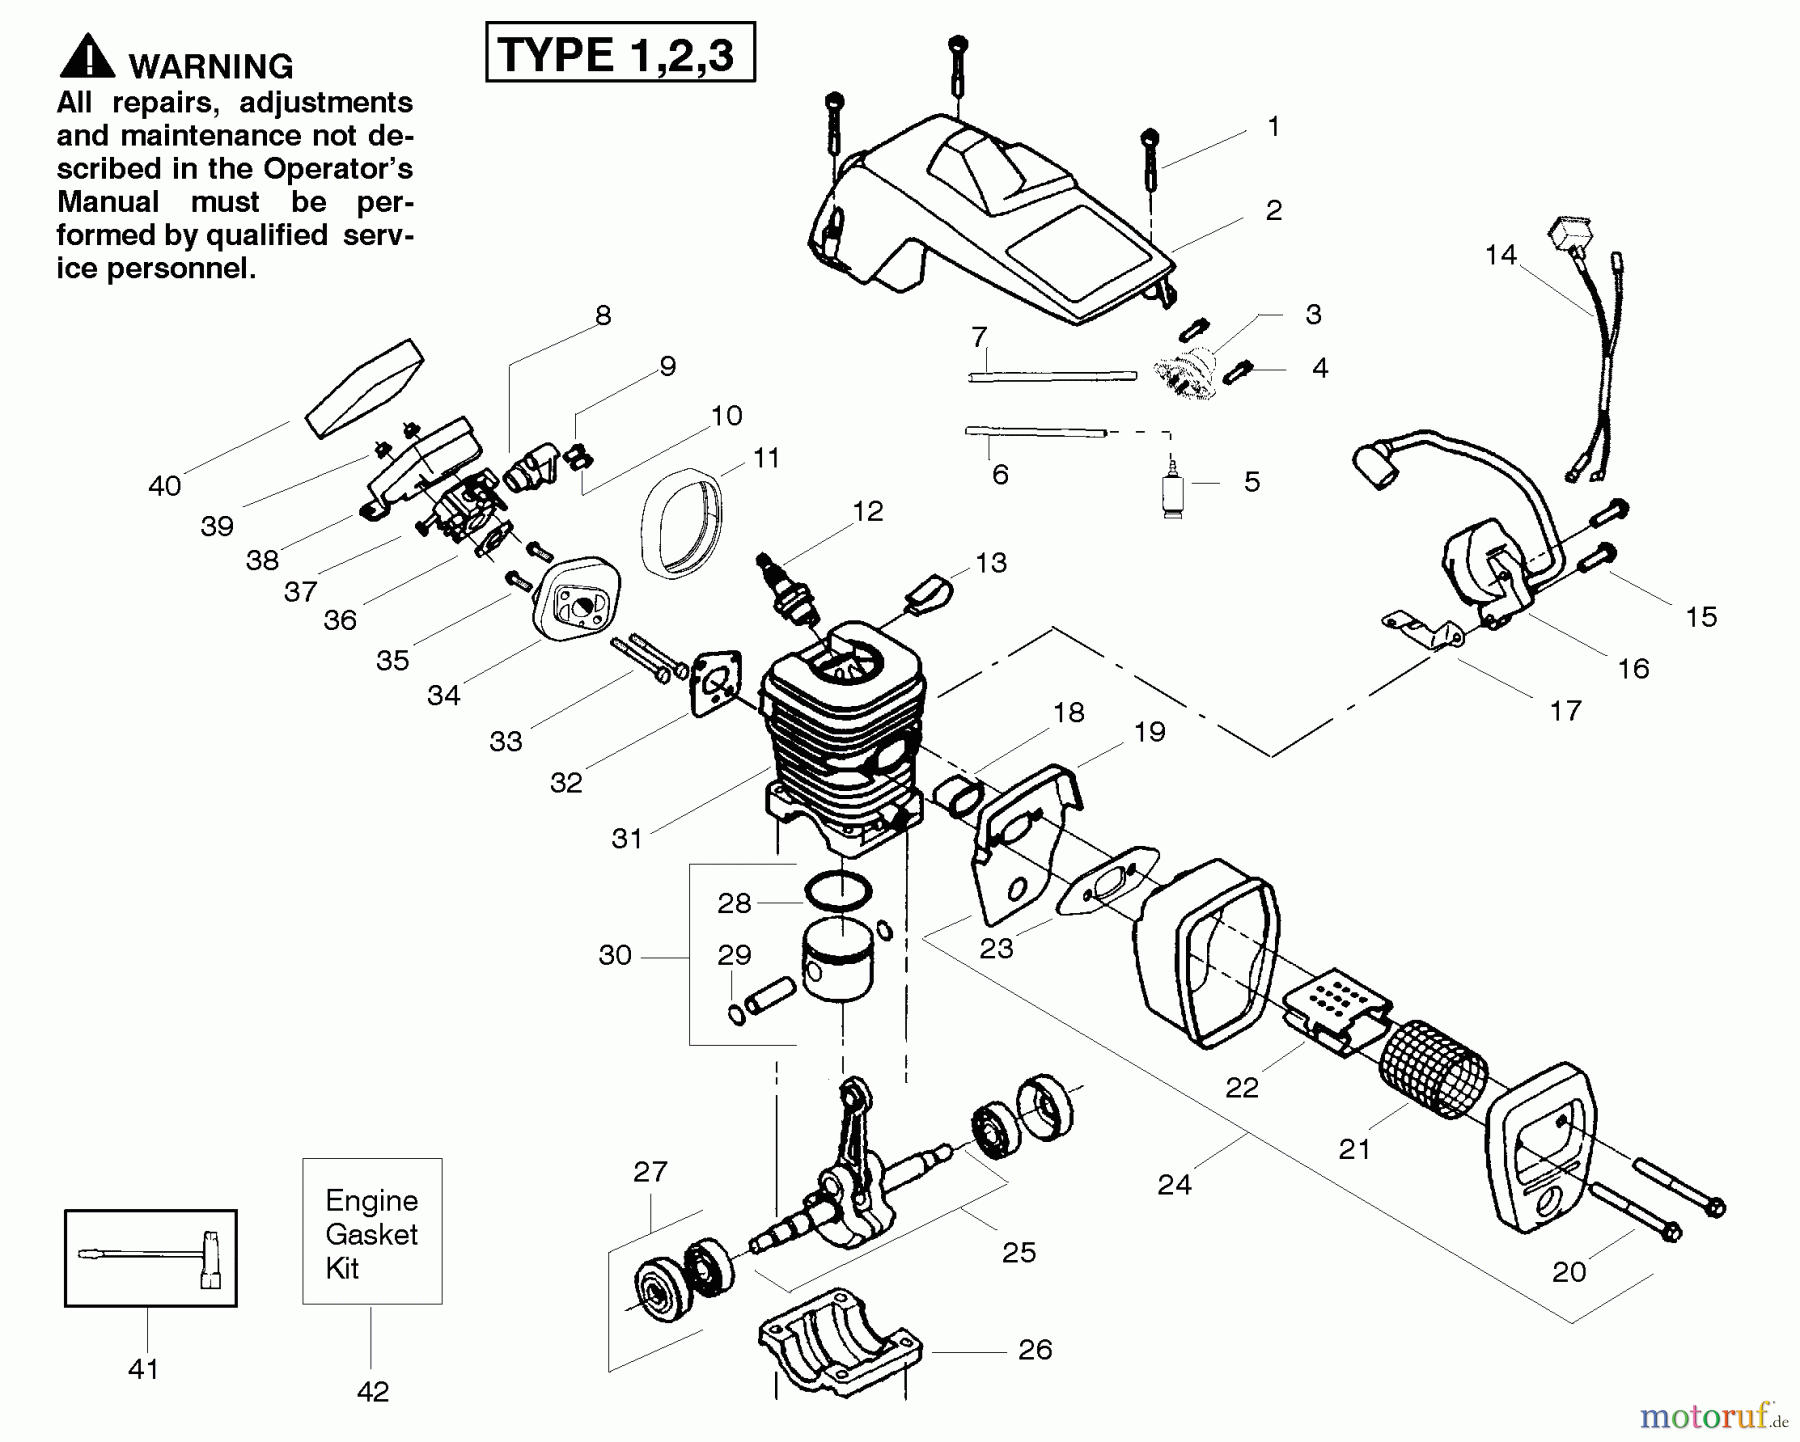  Poulan / Weed Eater Motorsägen PP260 (Type 1) - Poulan Pro Chainsaw Engine Type 1,2,3